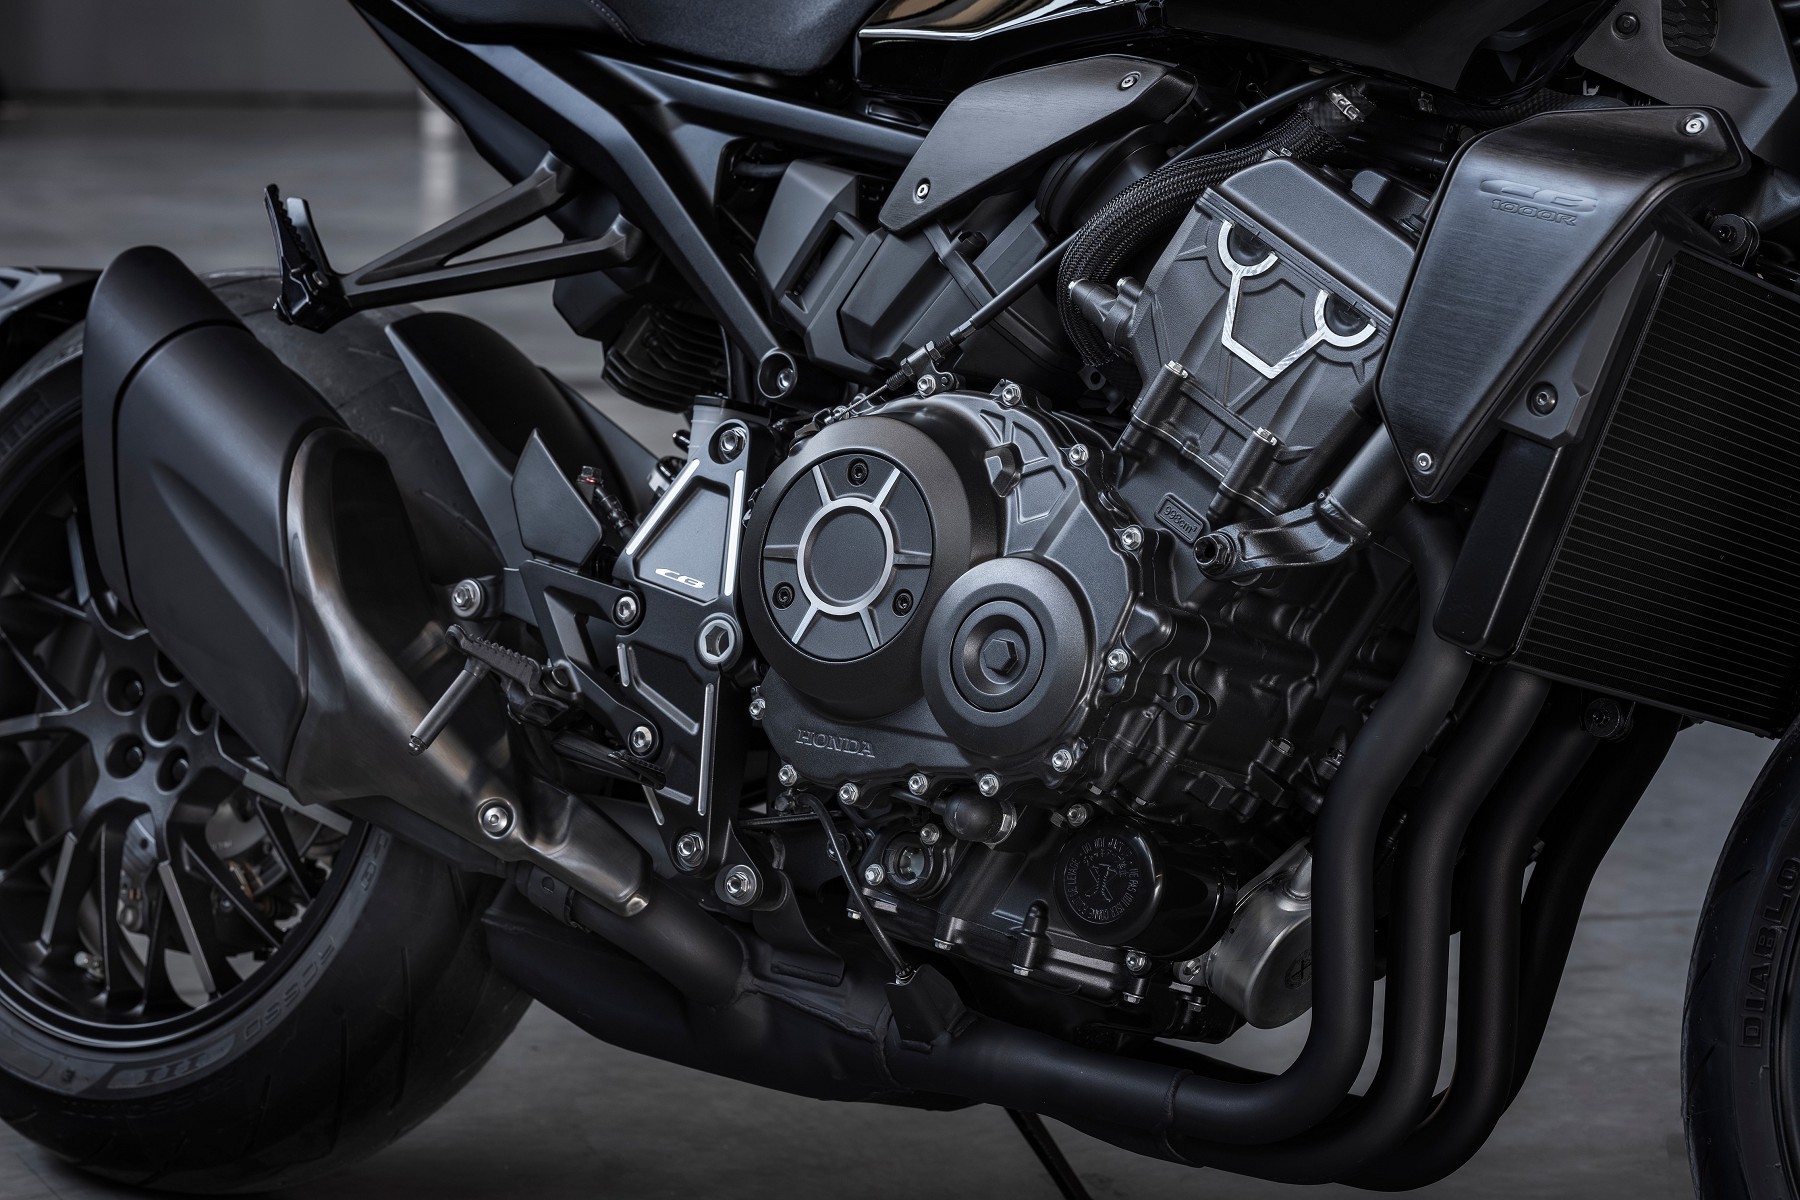 CB1000R Black Edition 包含飾板引擎等通通都被黑化處理。(圖片來源/ Honda)